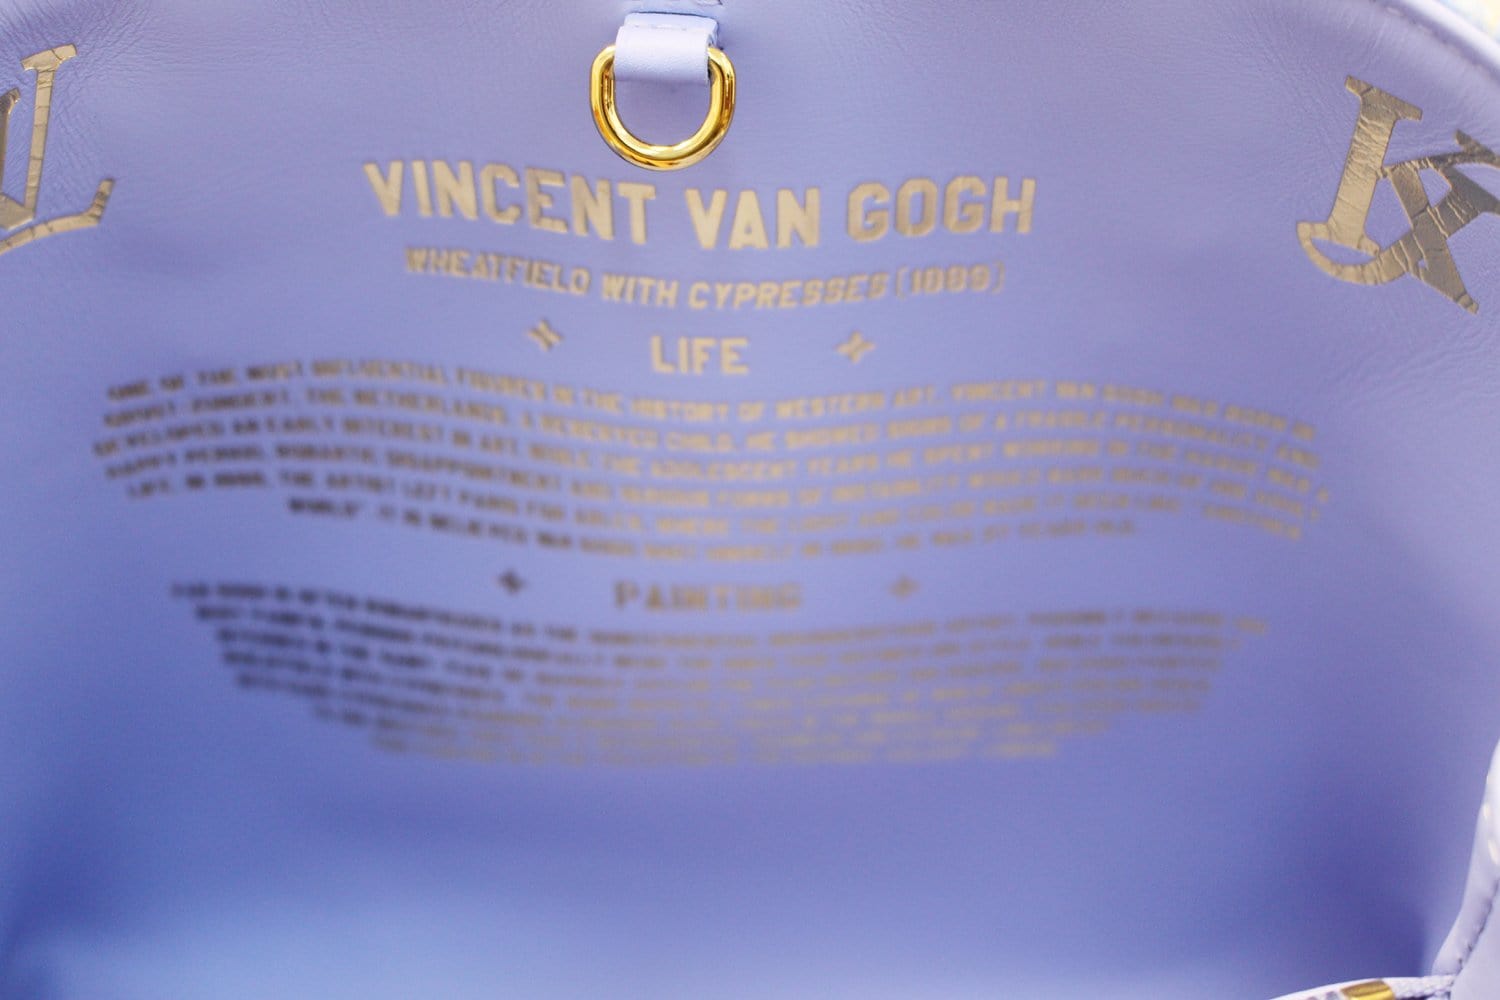 Louis Vuitton X Vans Reflective LV logo